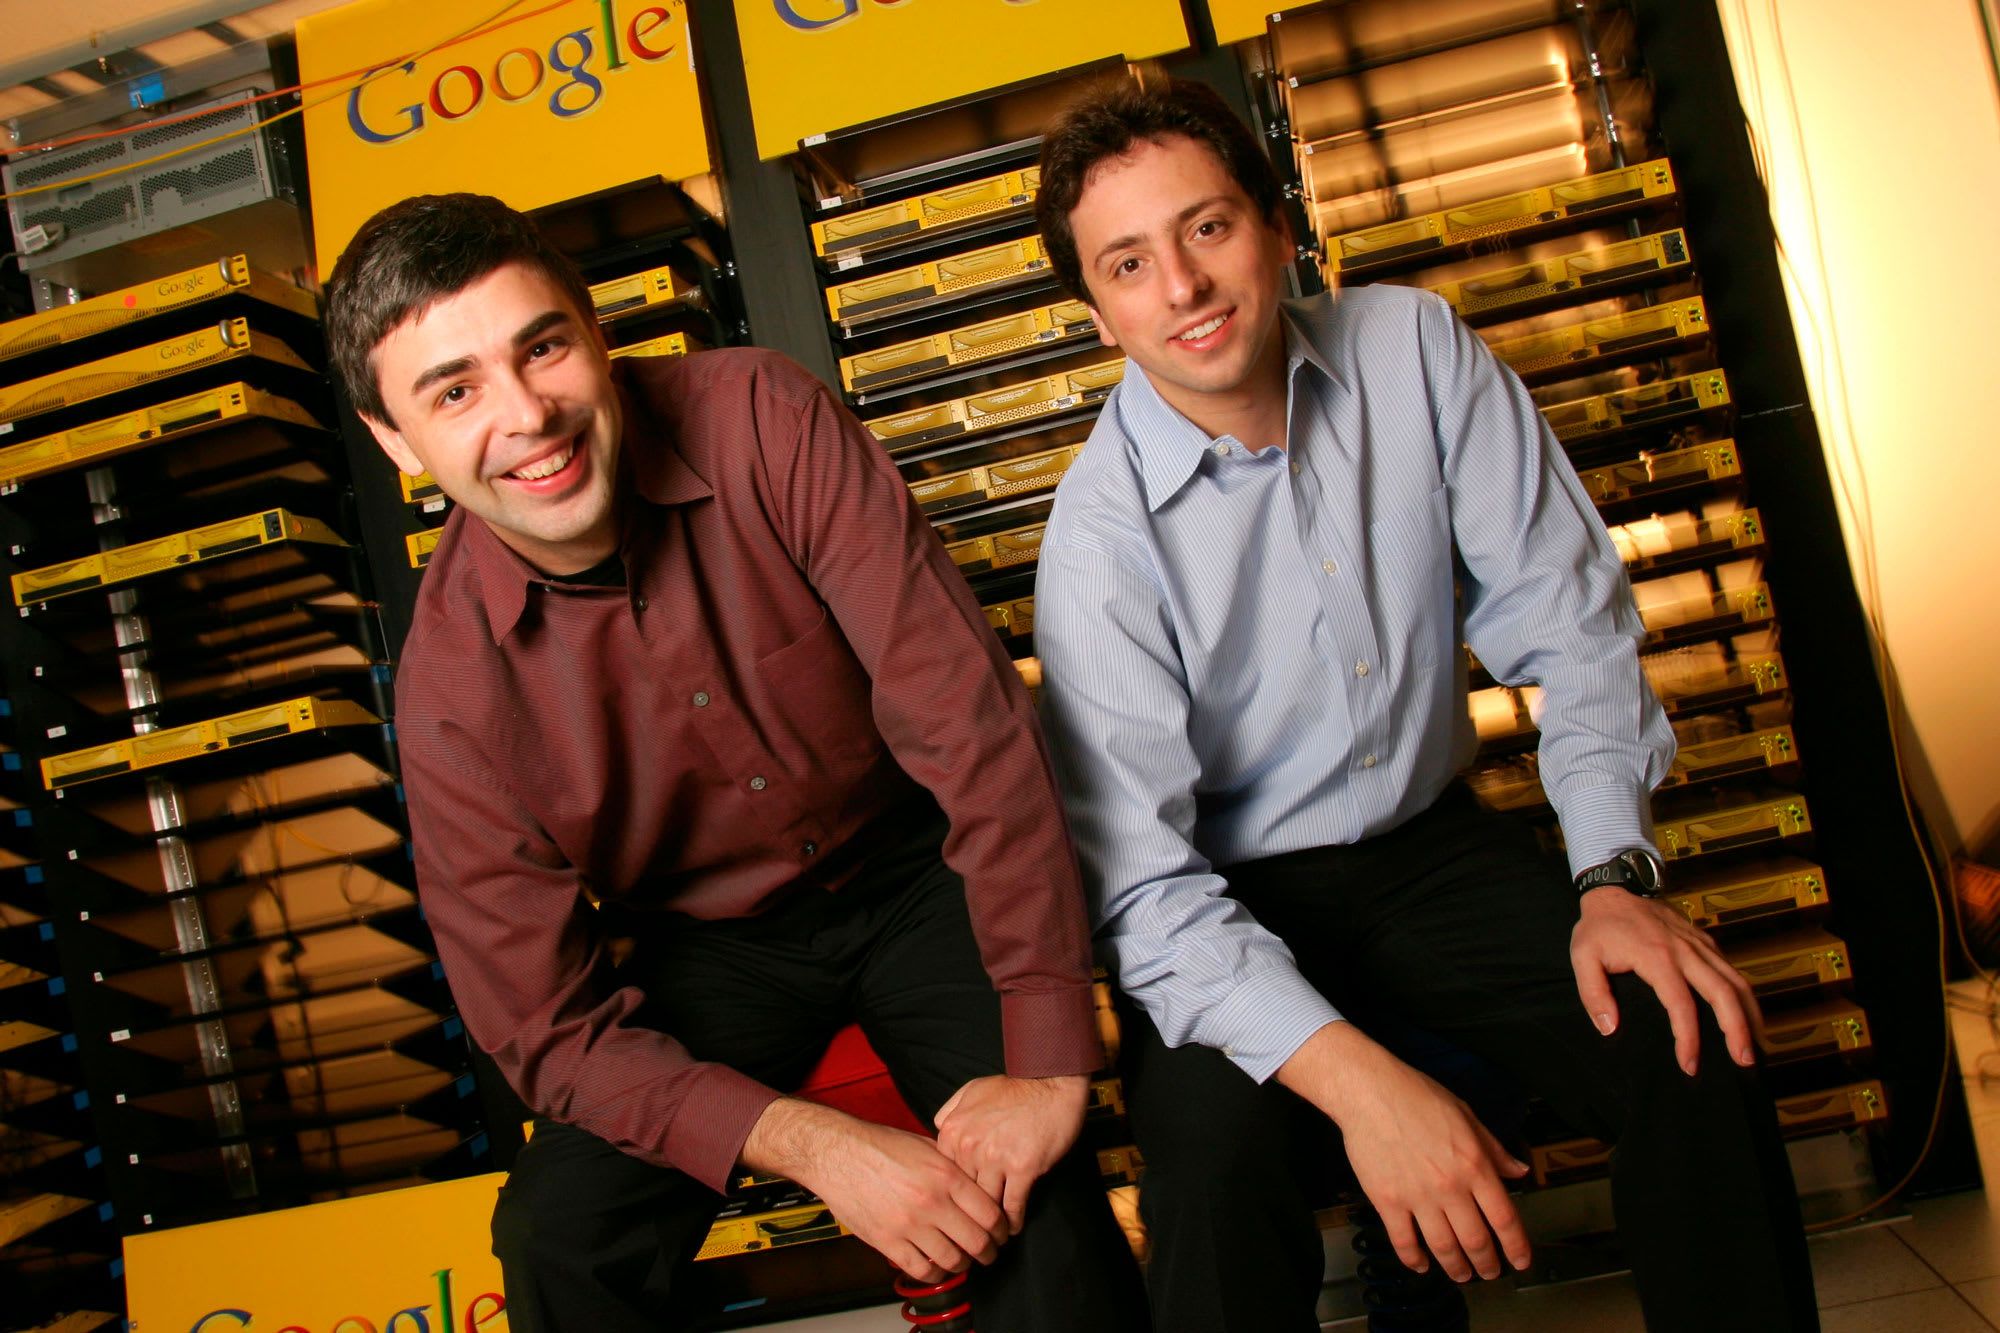 Google virtual tour of Larry Page, Sergey Brin's 1998 garage office